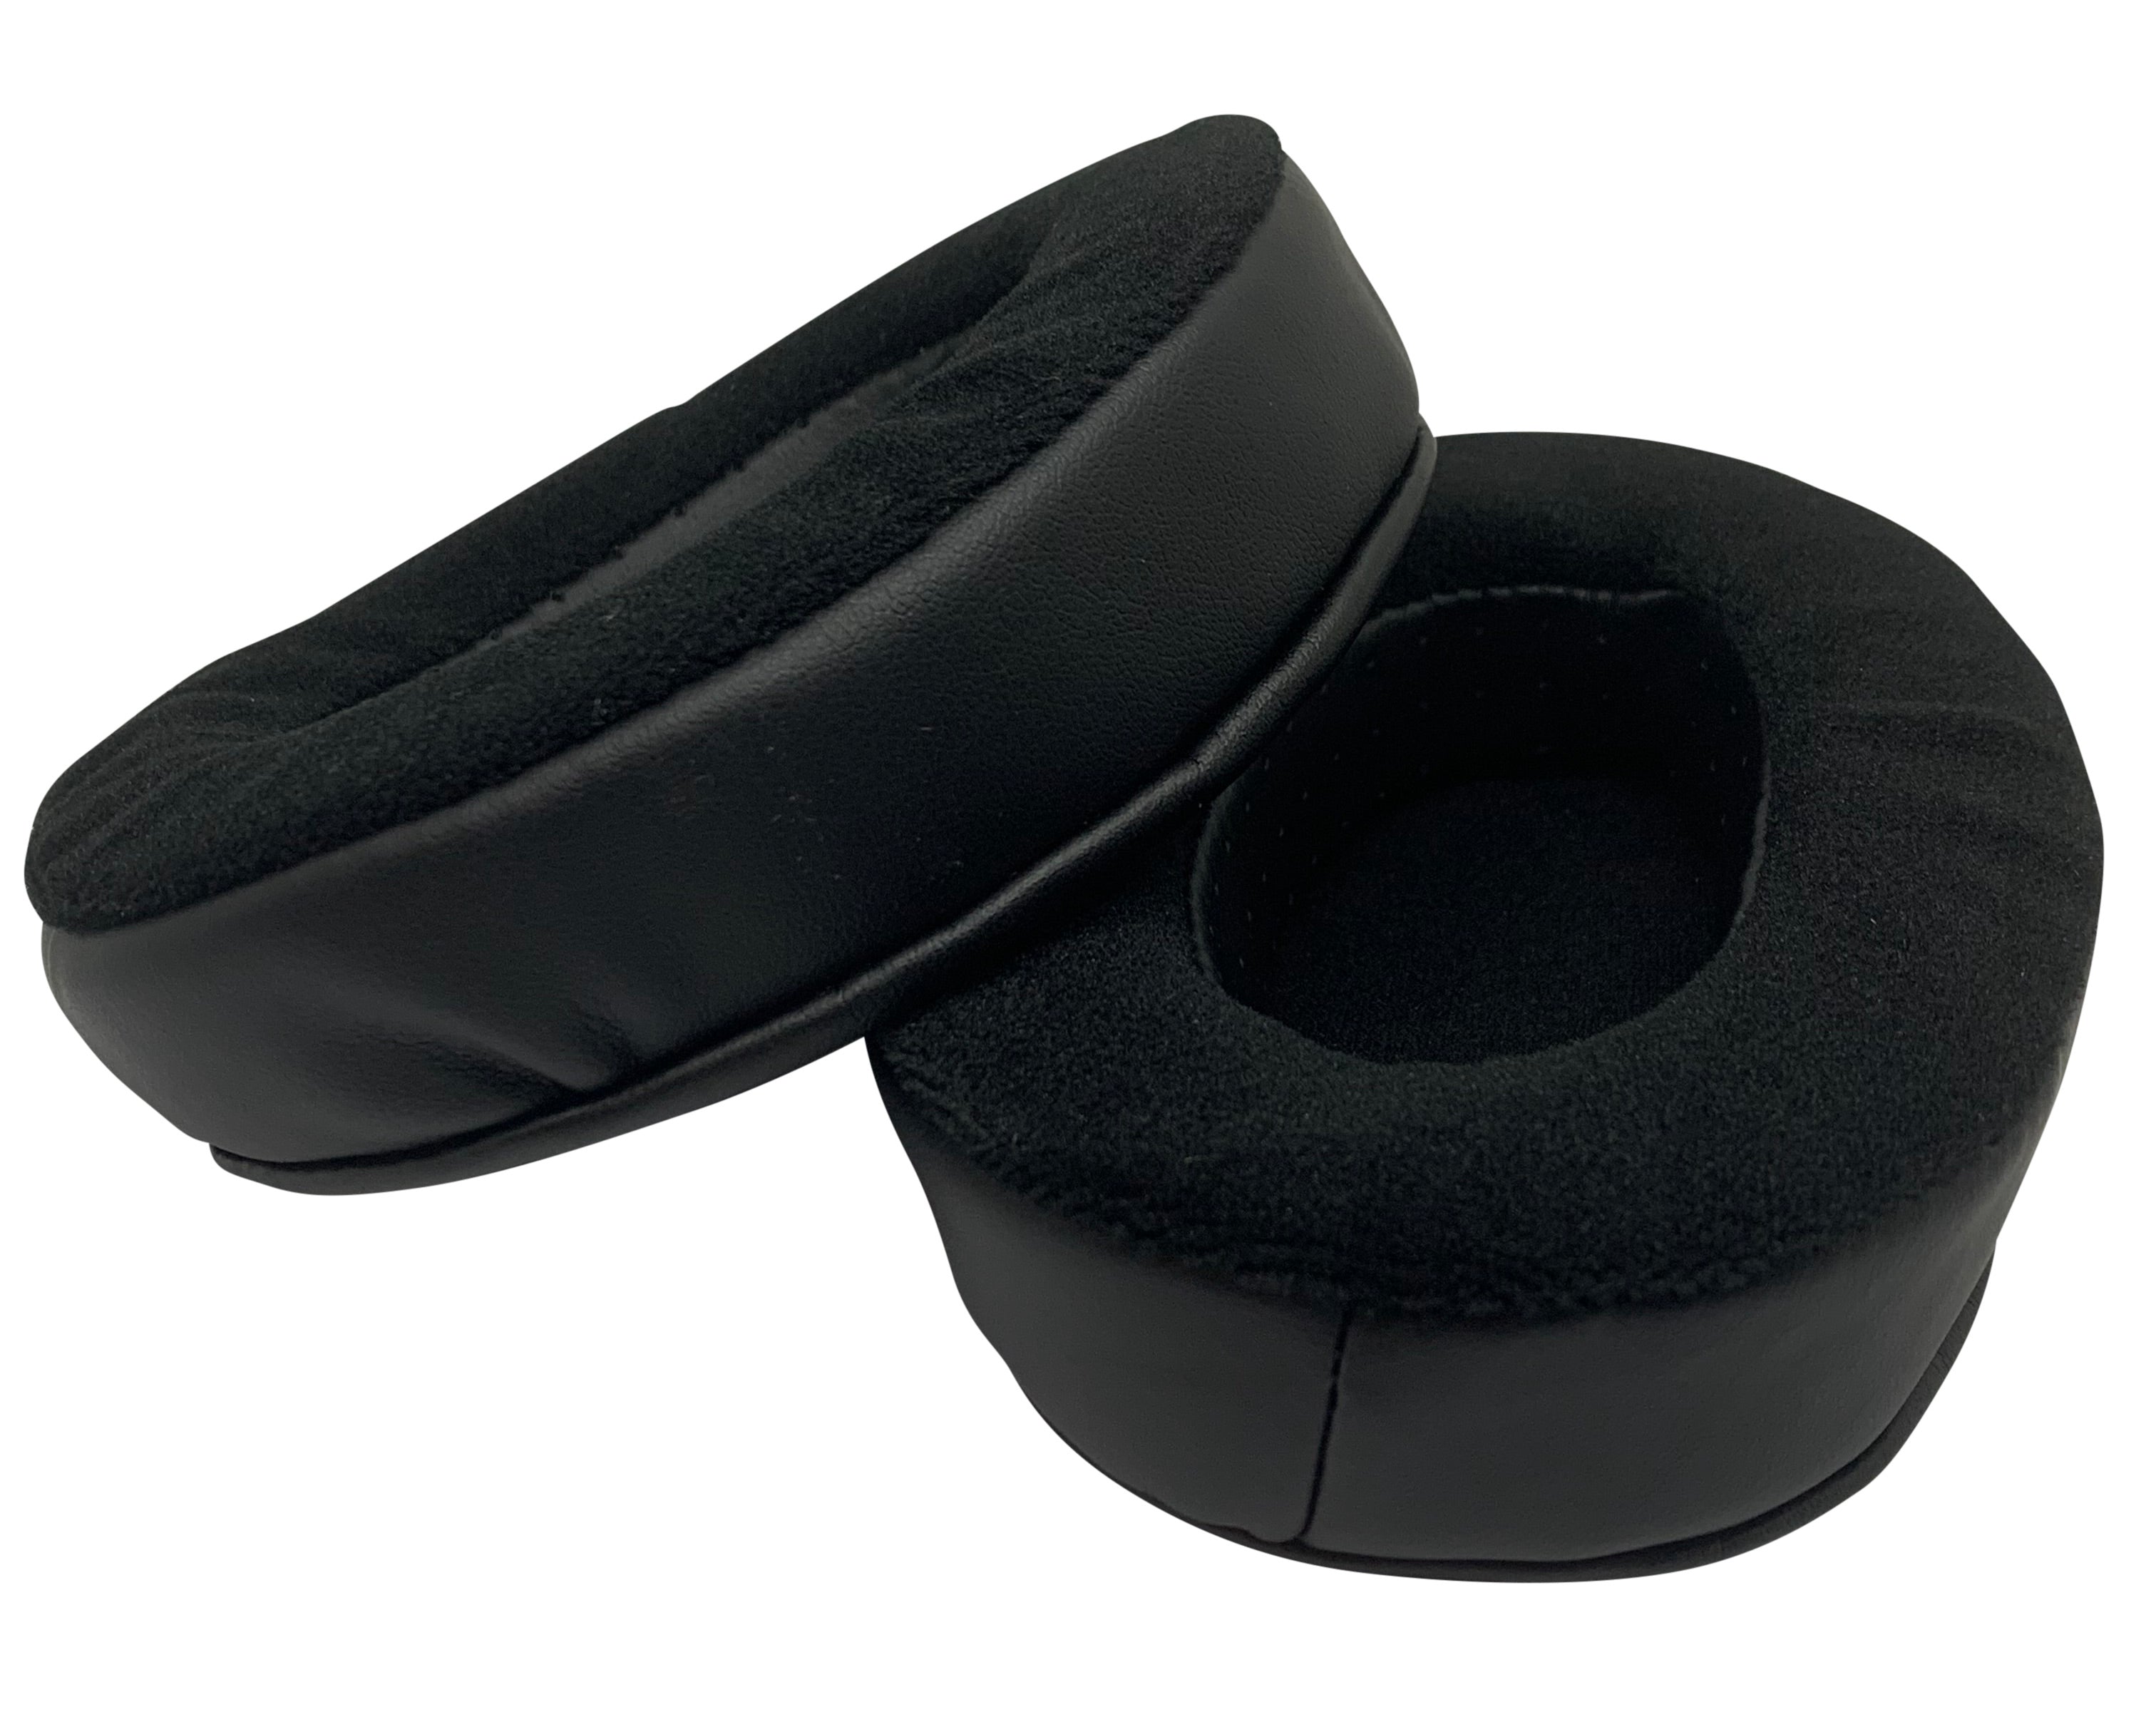 CentralSound Premium XL Memory Foam Ear Pad Cushions for Audio-Technica Headphones - CentralSound